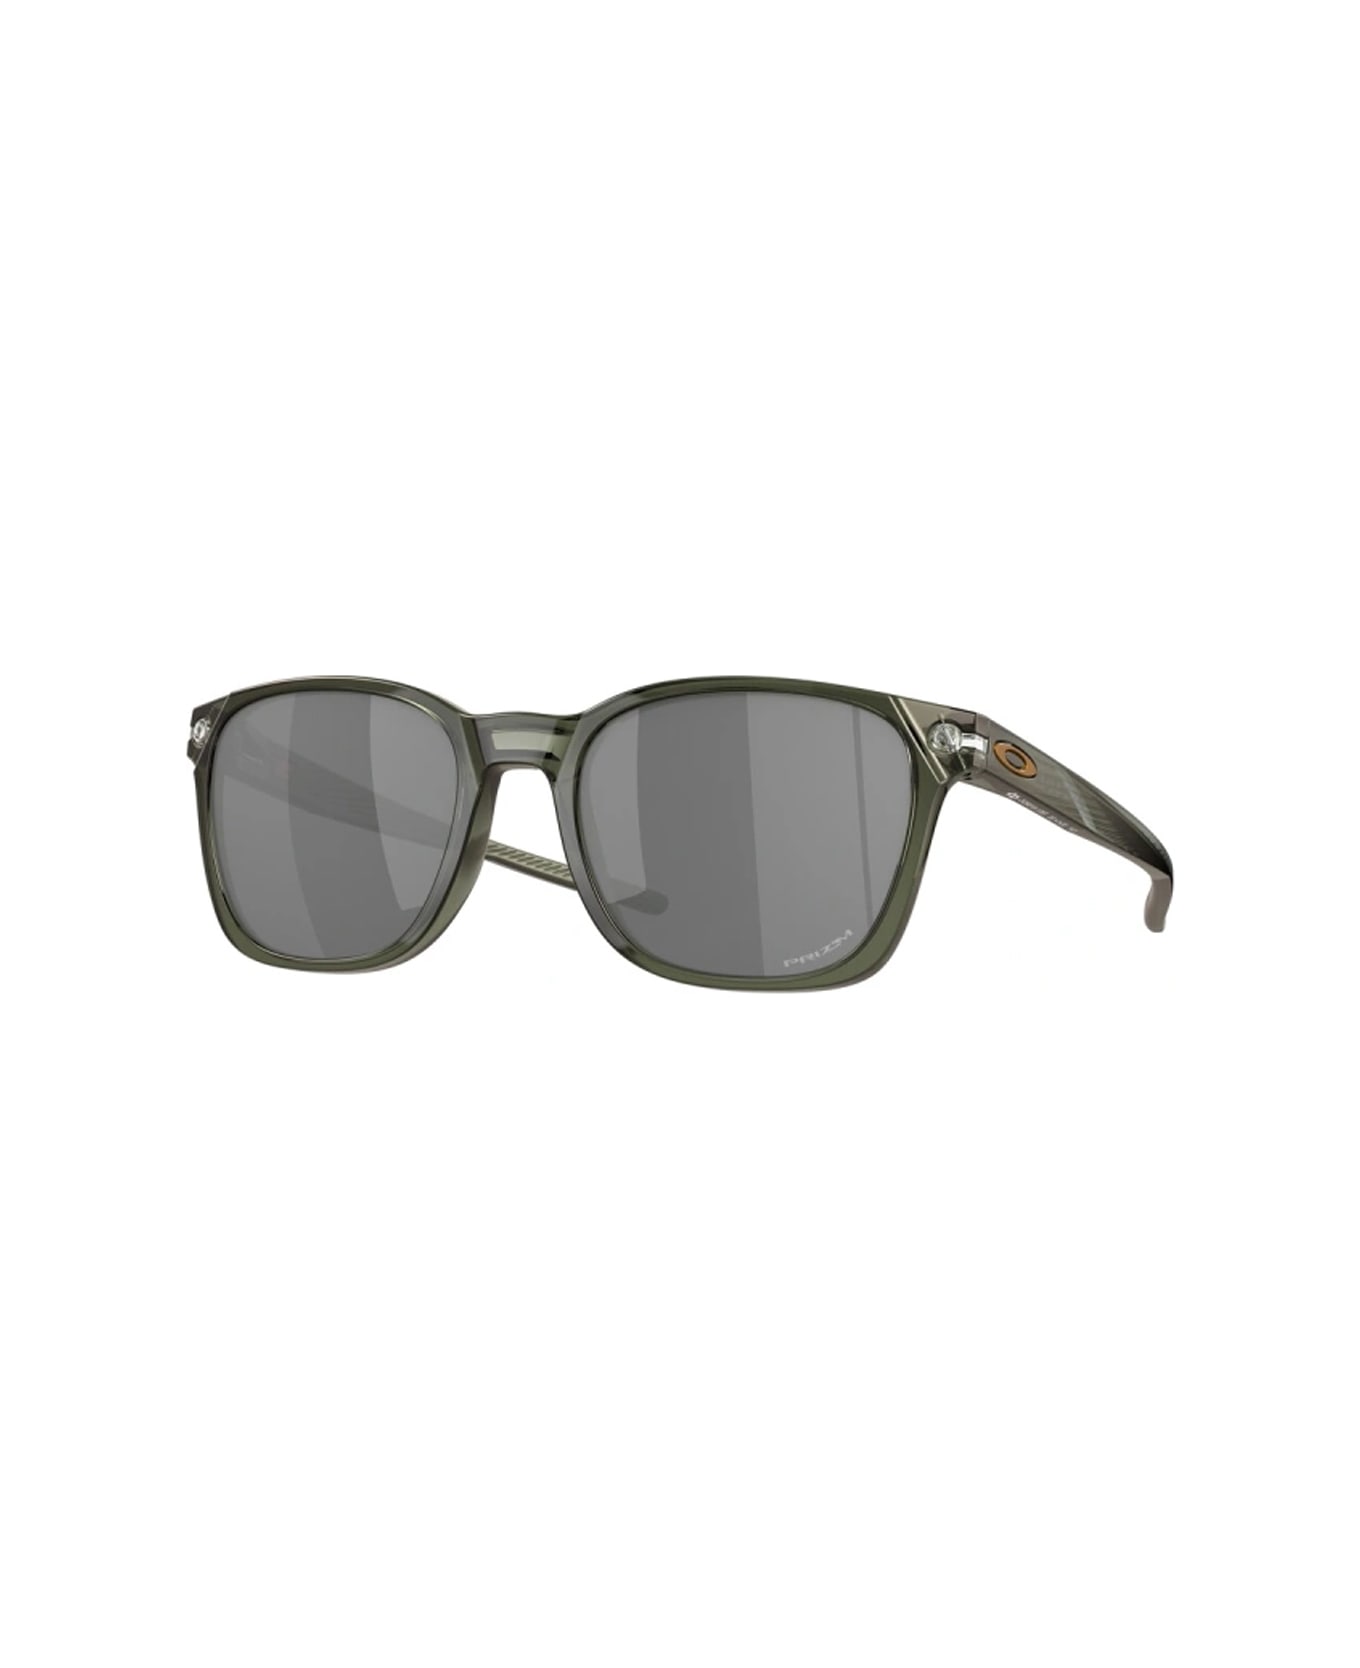 Oakley Oo9018 901813 Sunglasses - Verde